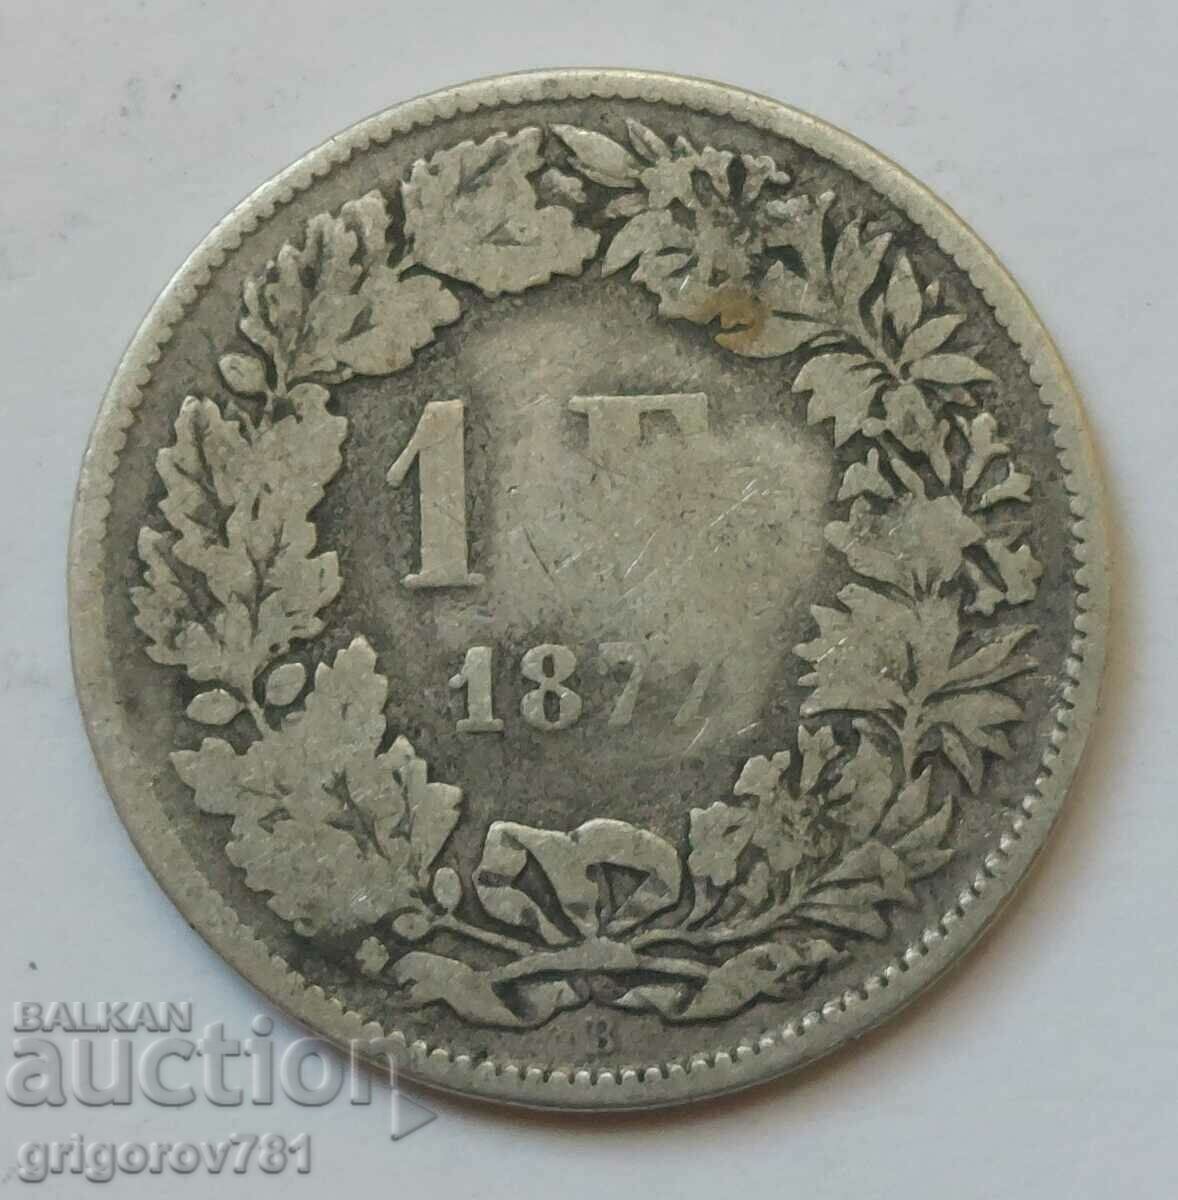 1 franc silver Switzerland 1877 B - silver coin